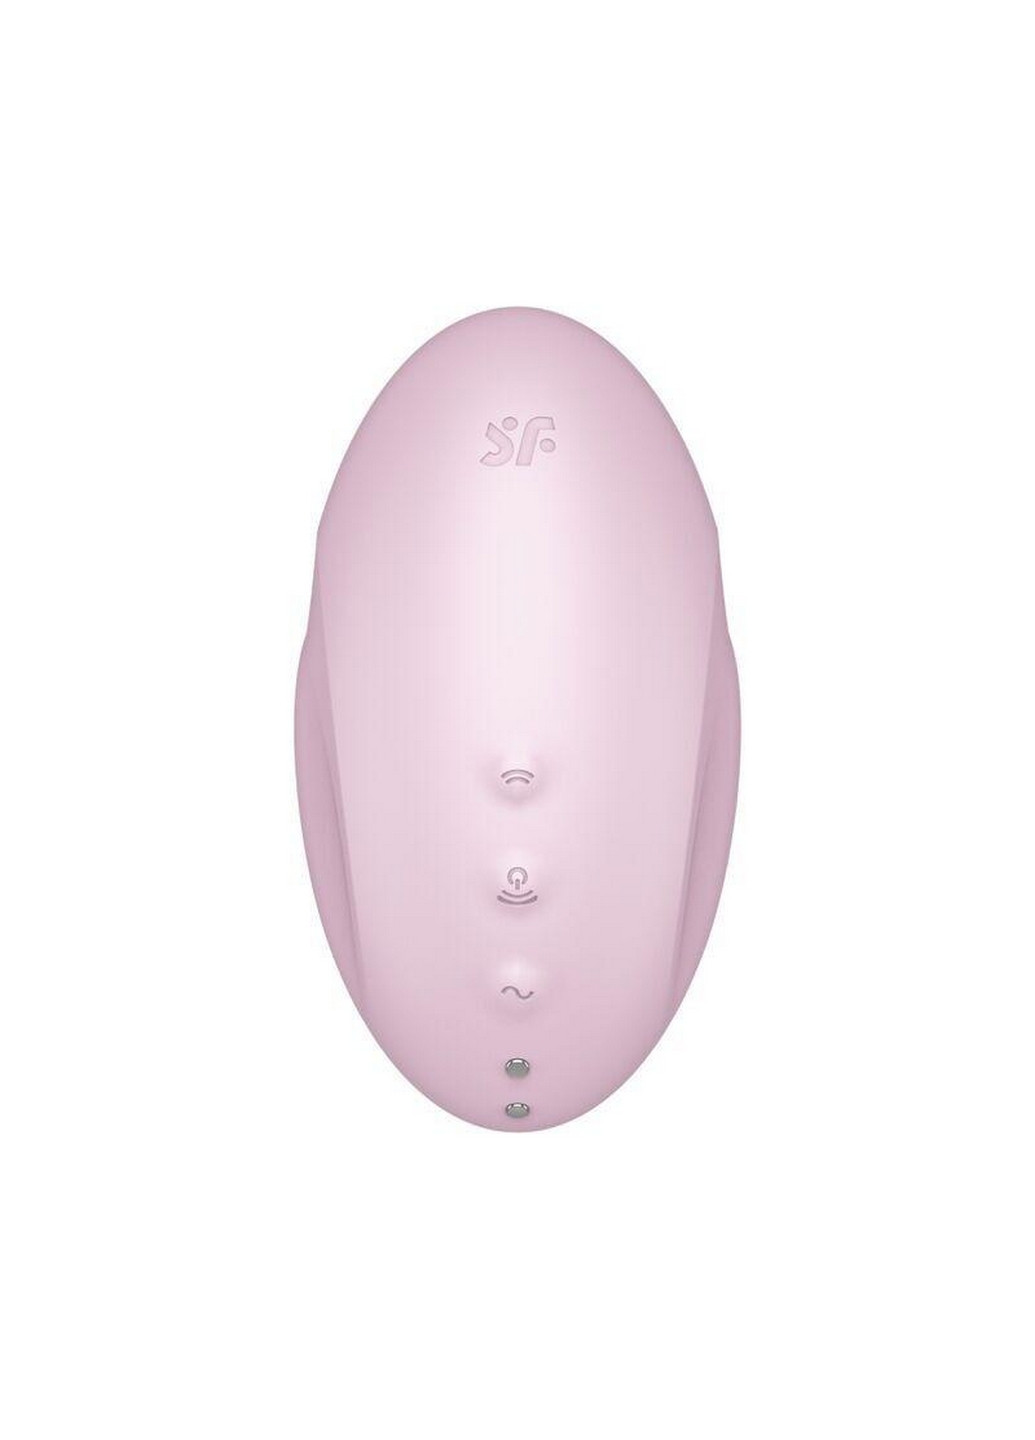 Вакуумний стимулятор Vulva Lover 3 Pink Satisfyer (260450548)